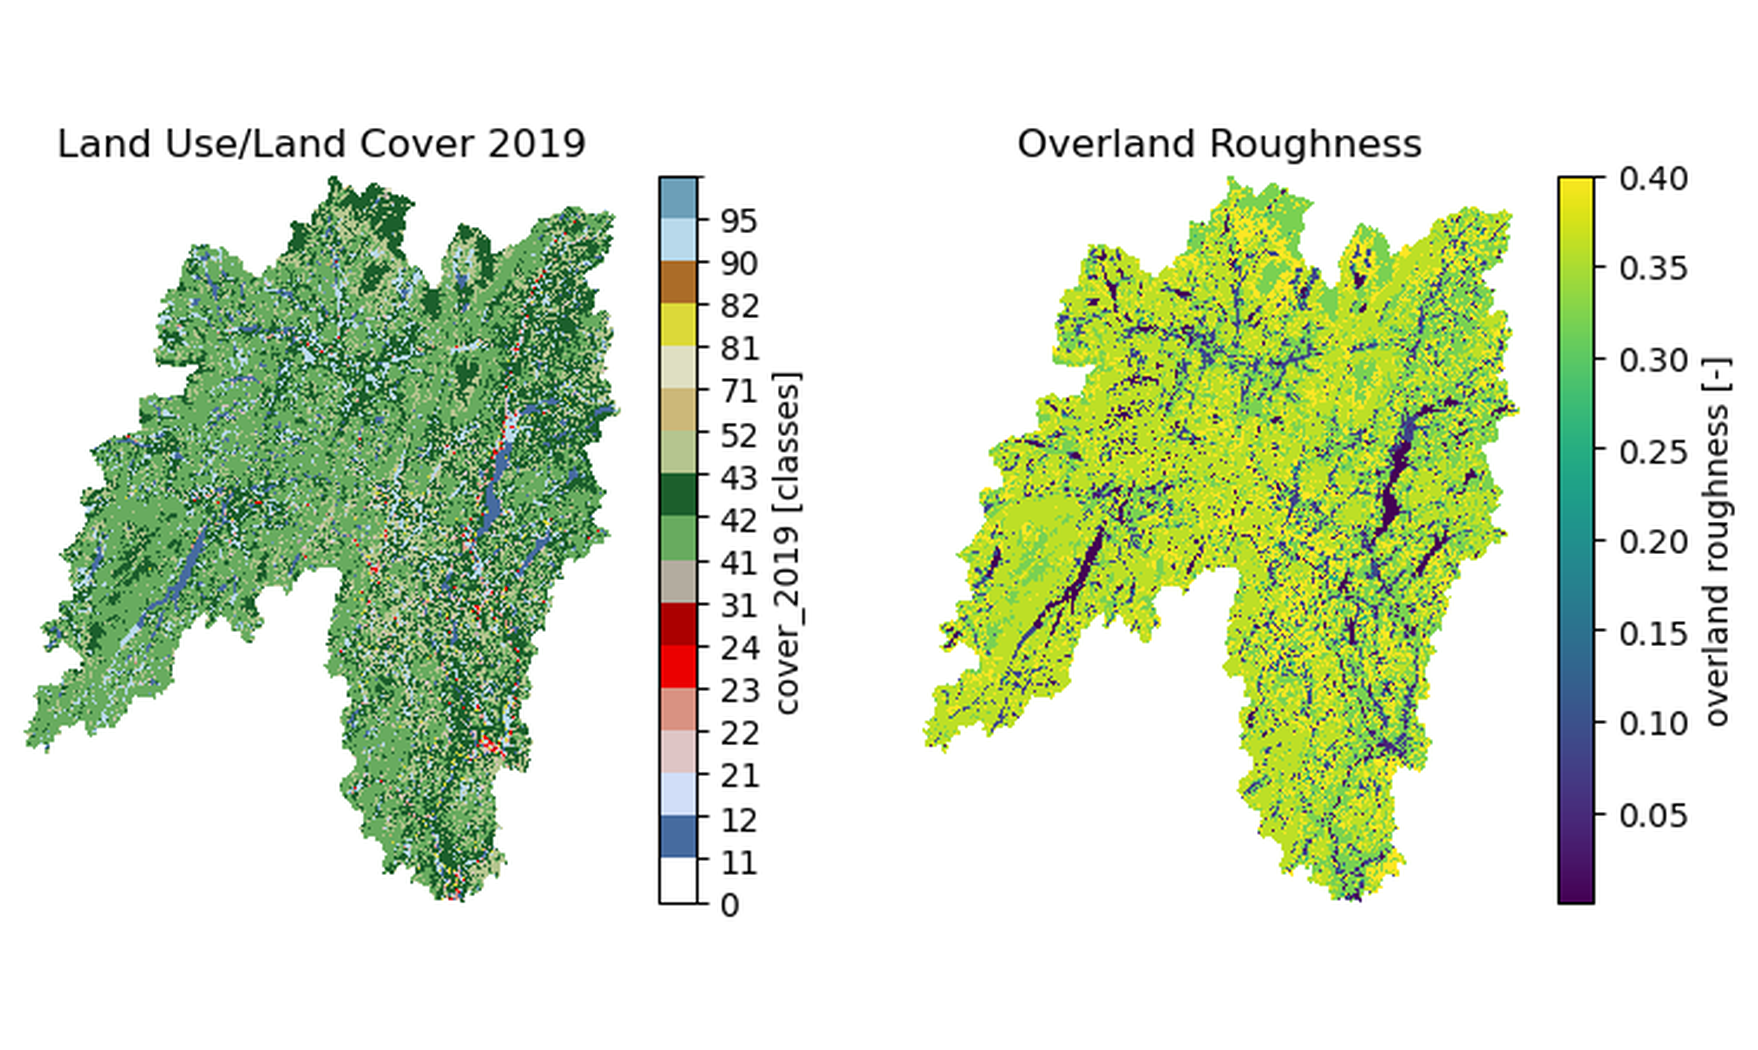 Land Use/Land Cover